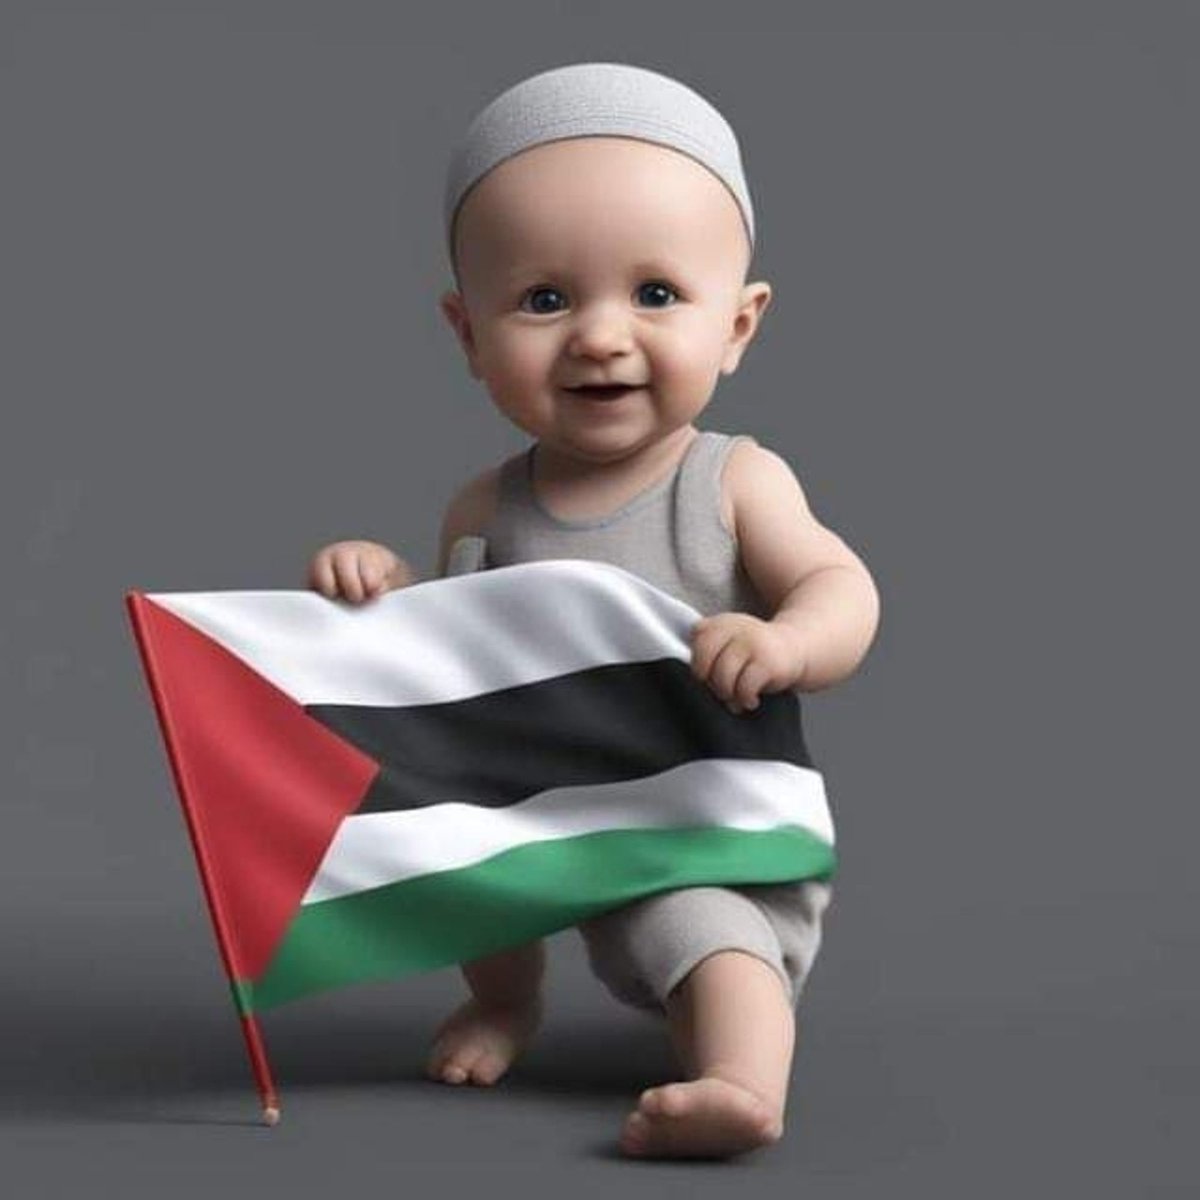 @soupalestina @Adote1Amigo Palestina livre